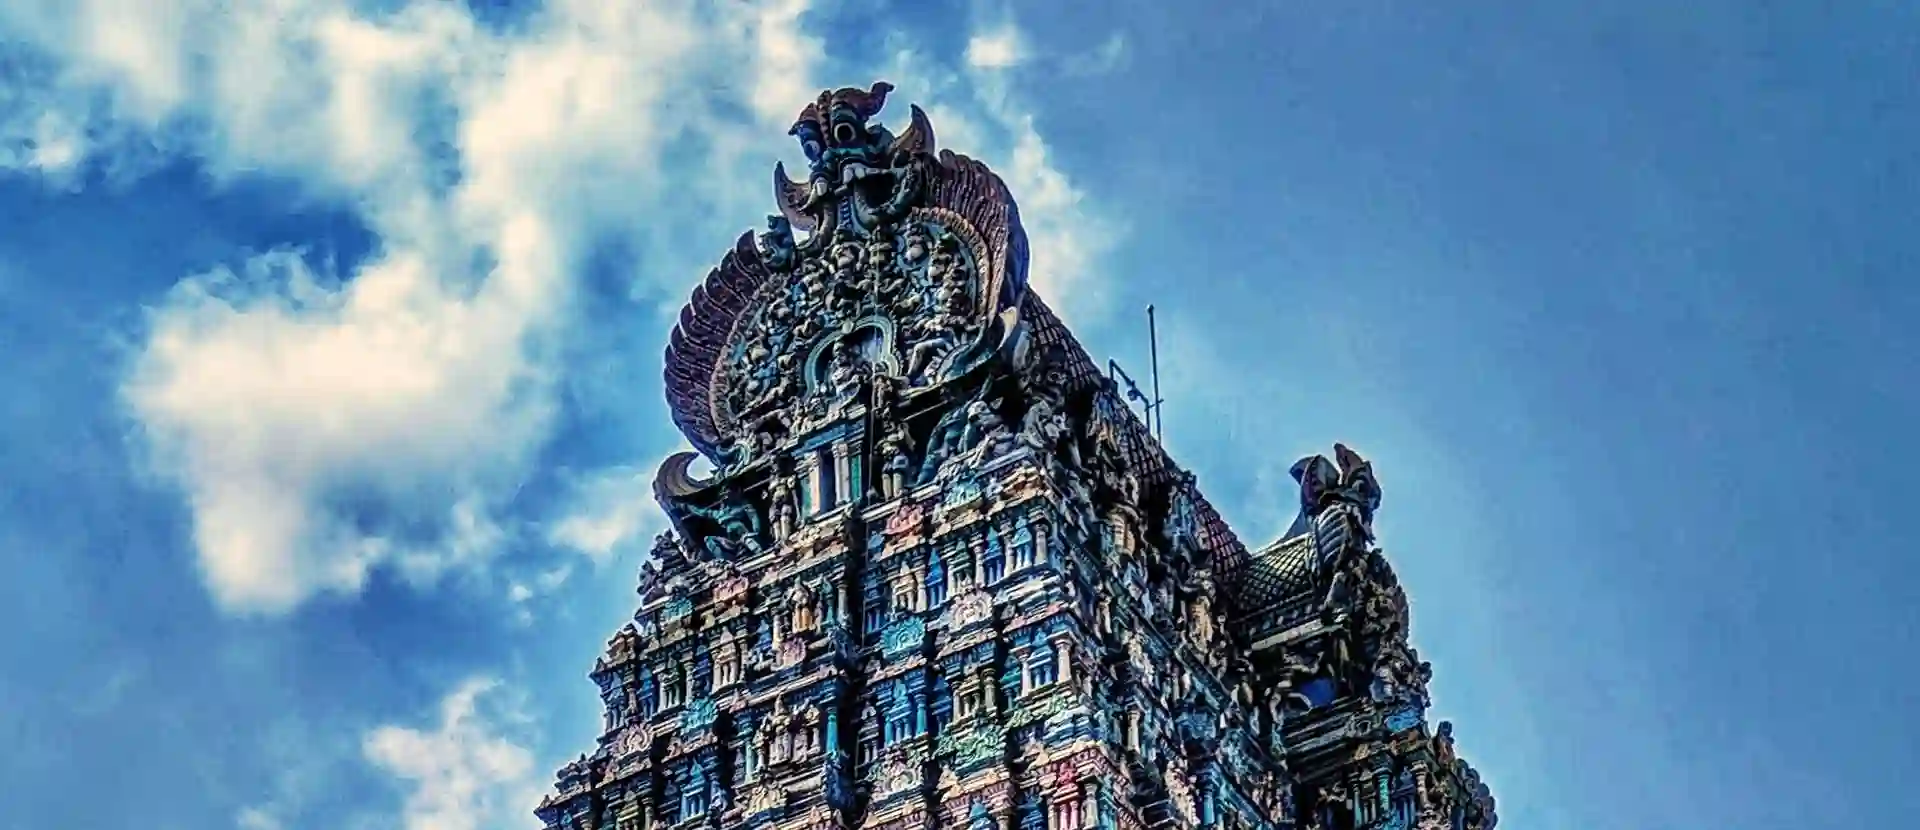 Madurai image